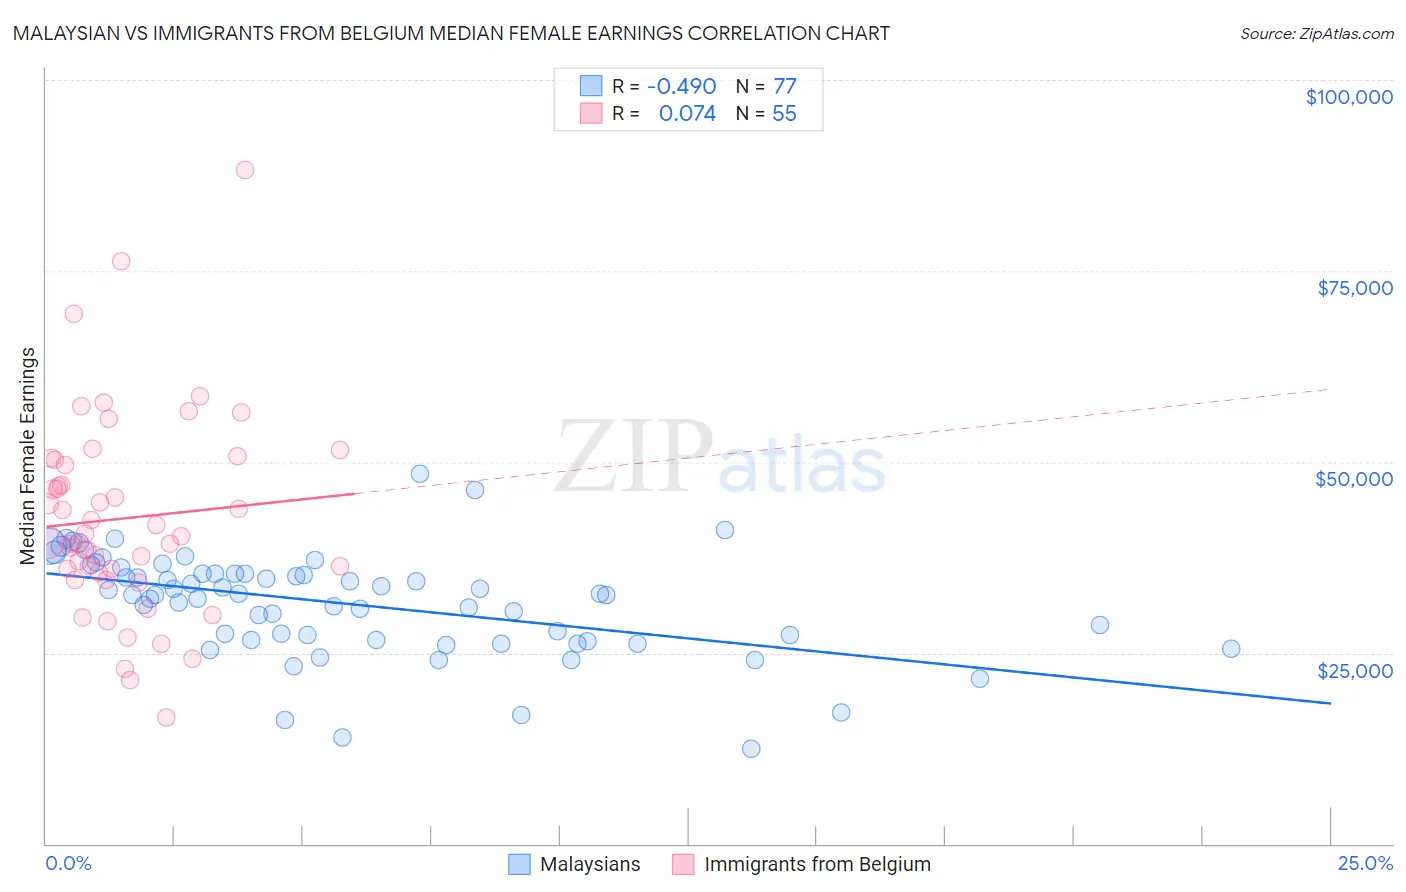 Malaysian vs Immigrants from Belgium Median Female Earnings